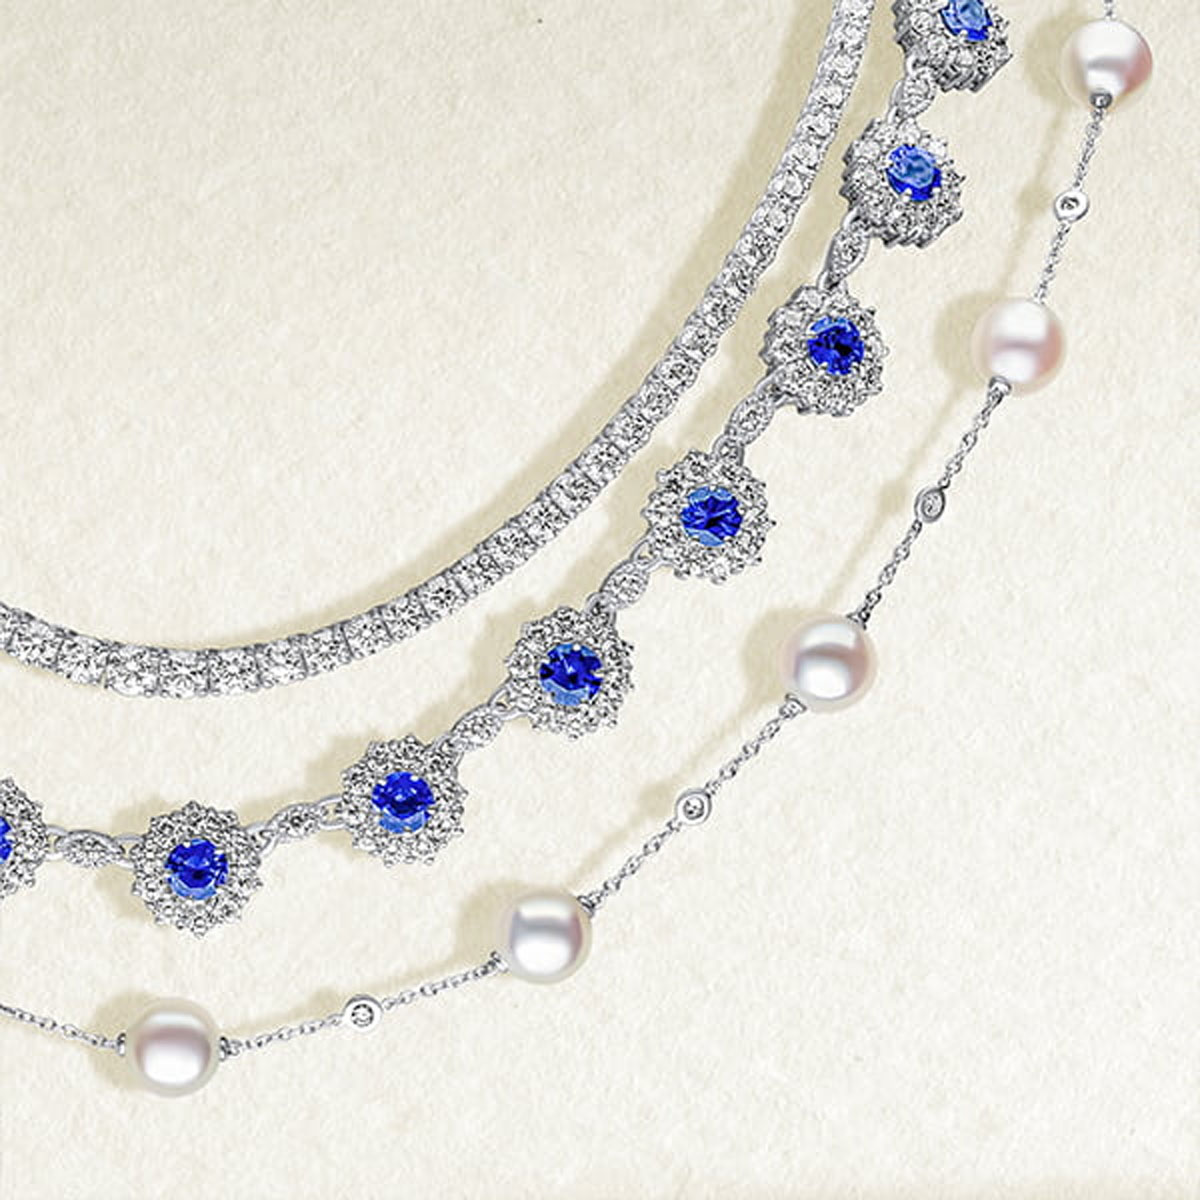 Winter Pendant Necklaces: Adding Sparkle to Your Wardrobe